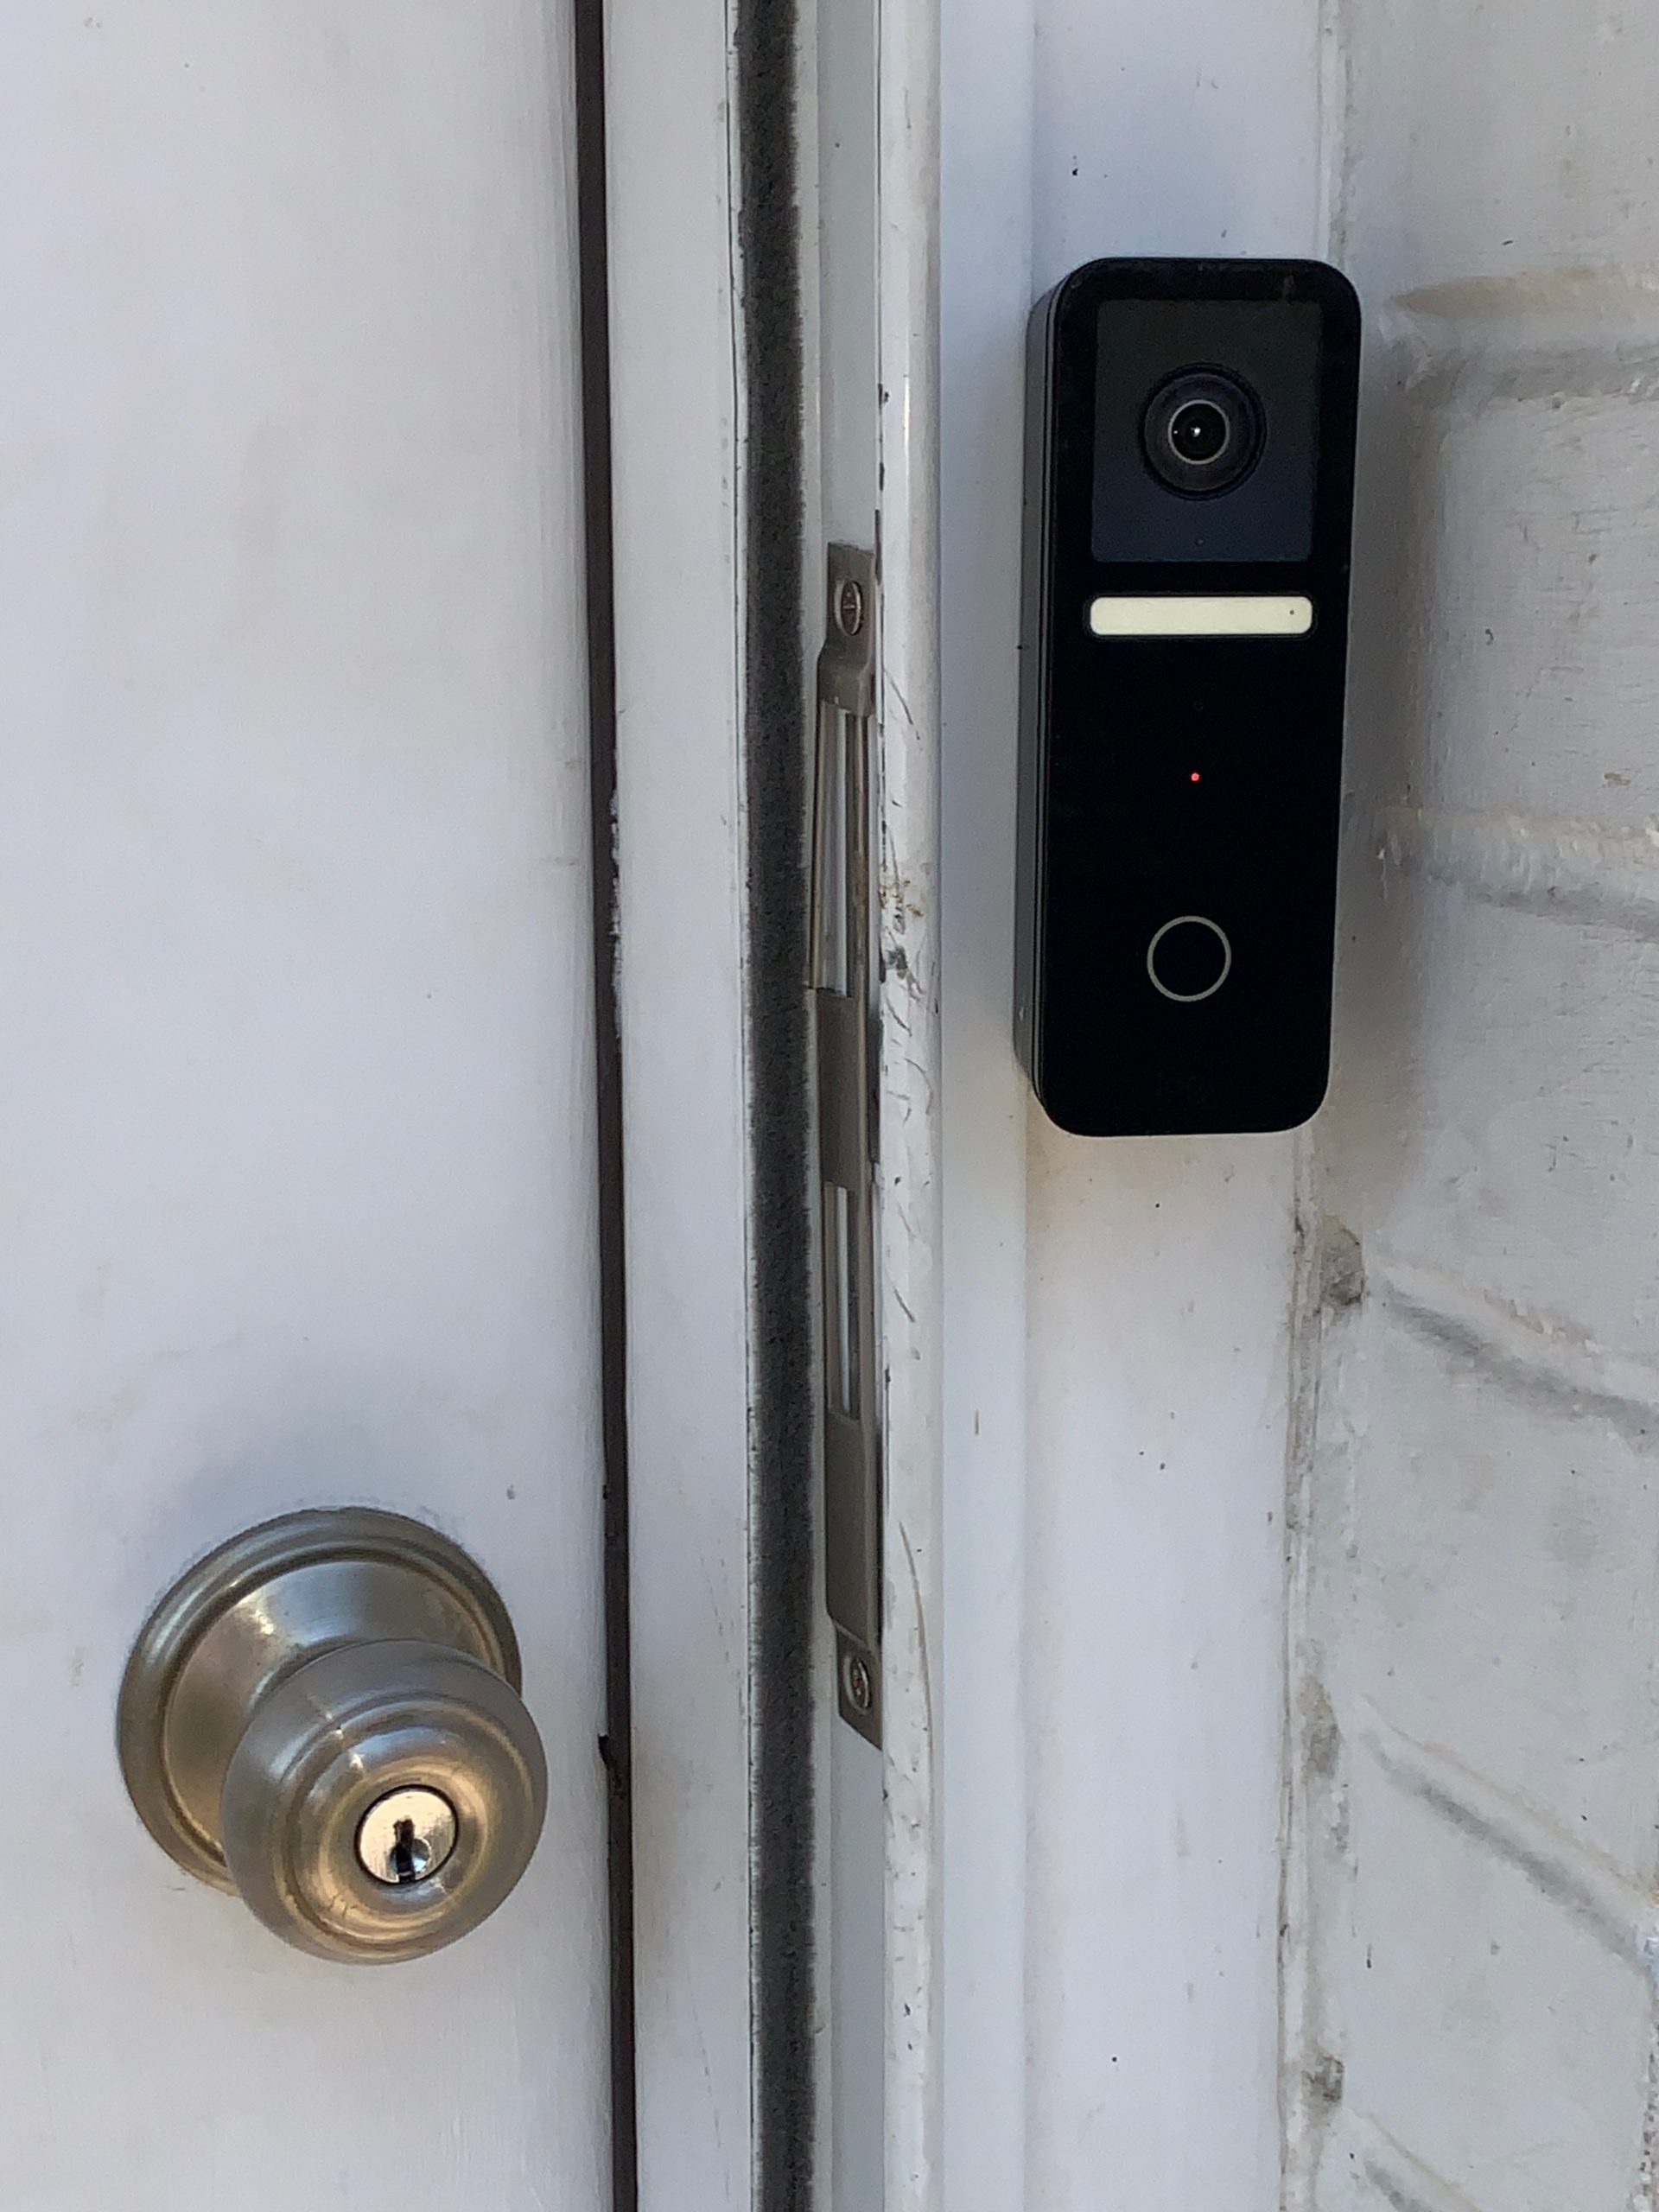 Video Doorbells that Fully Support HomeKit Secure Video